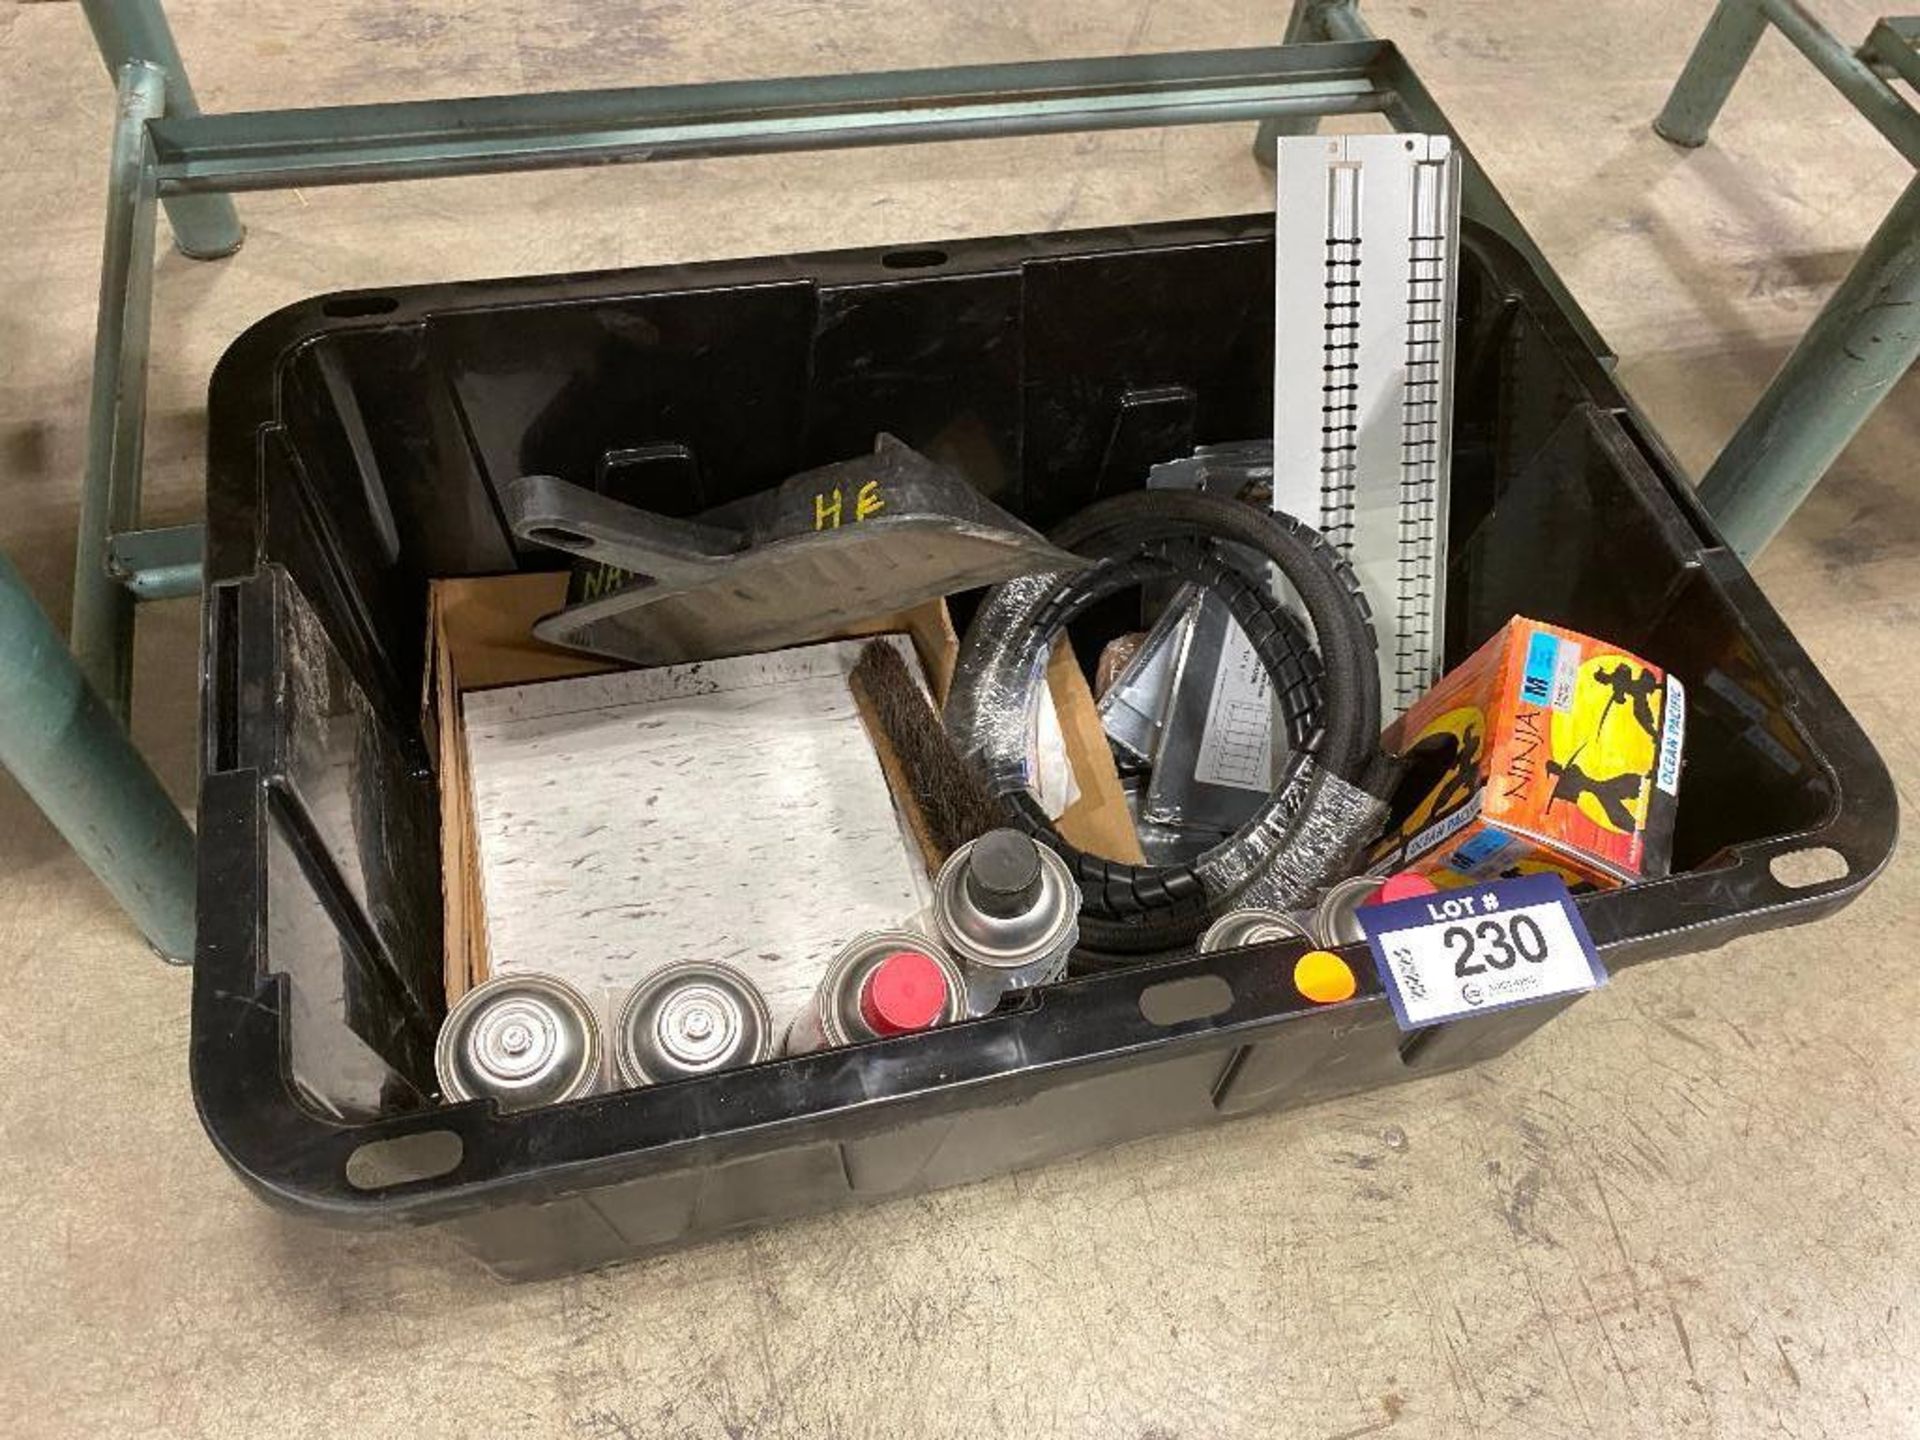 Box of Asst. Flooring Tiles, Fuel Injector Cleaner, Hoses, etc.